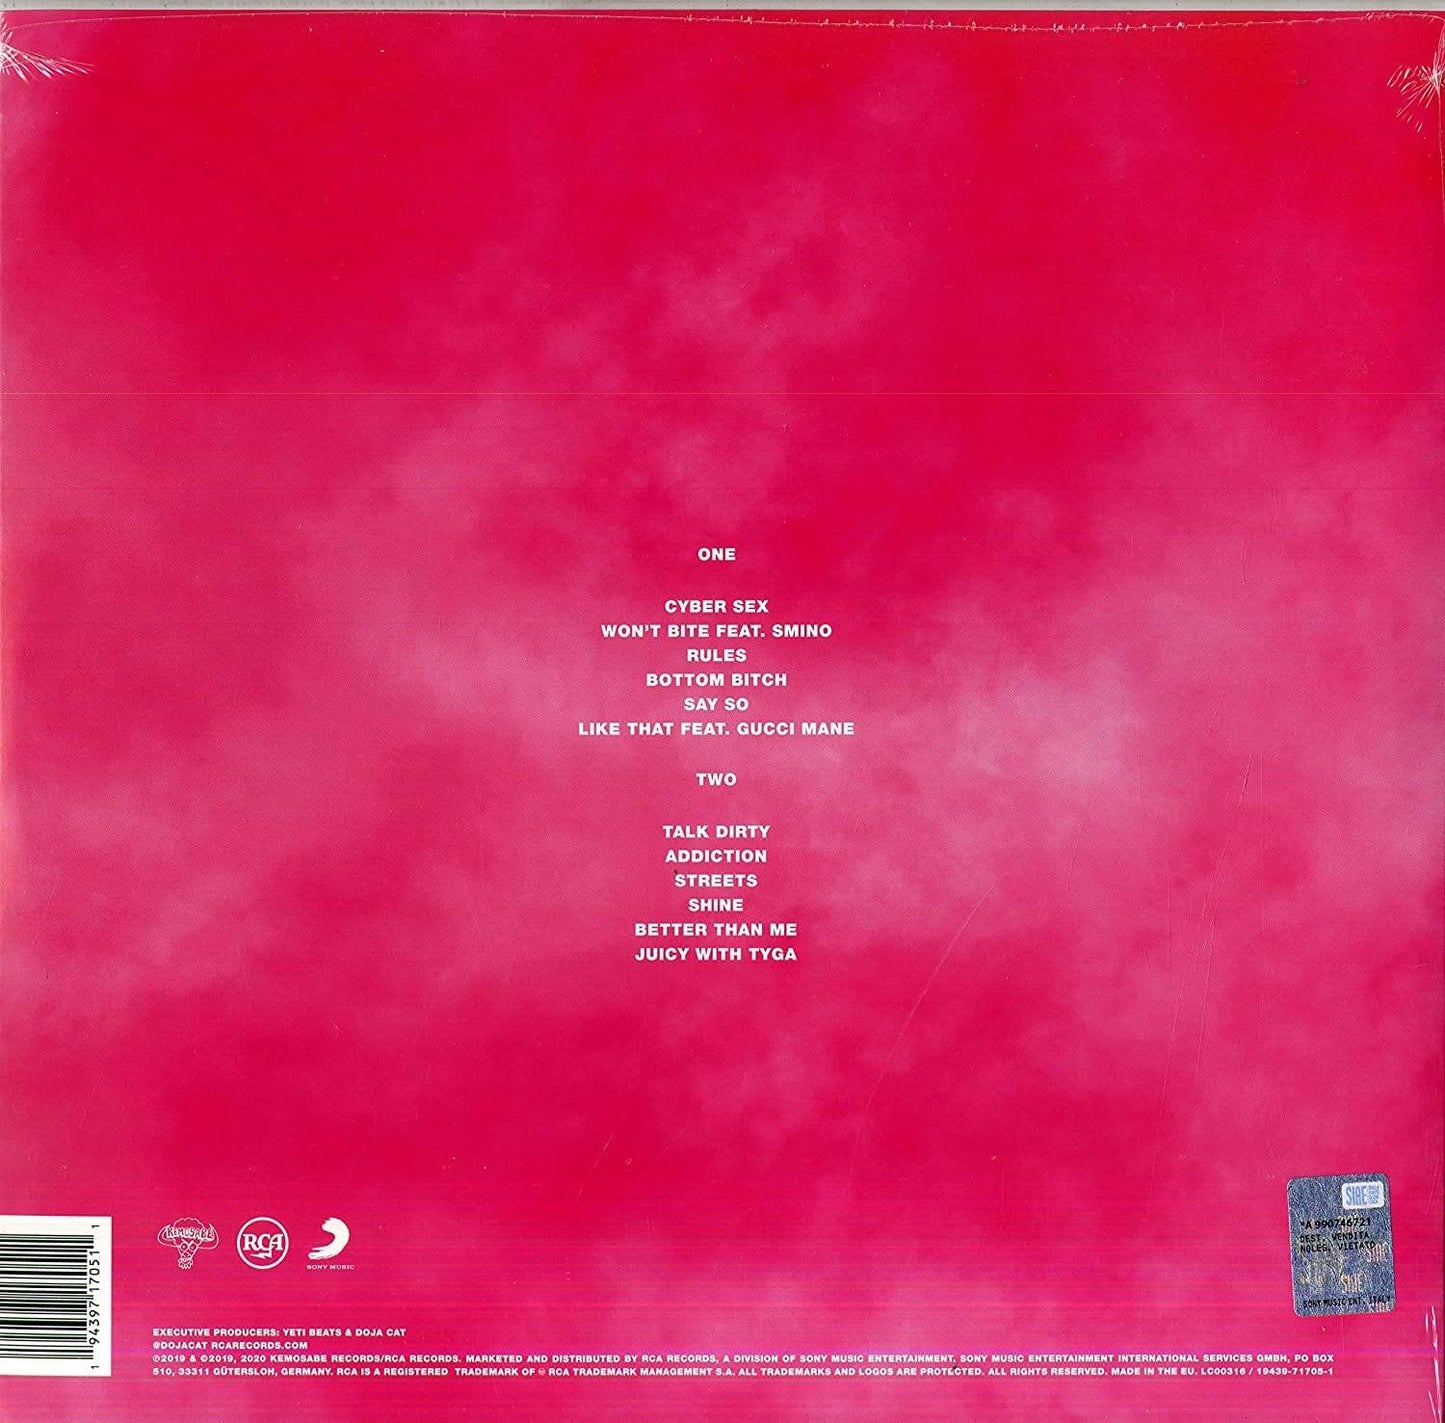 Doja Cat - Hot Pink (Explicit) (Limited Edition, 150 Gram, Pink Vinyl) (LP) - Joco Records